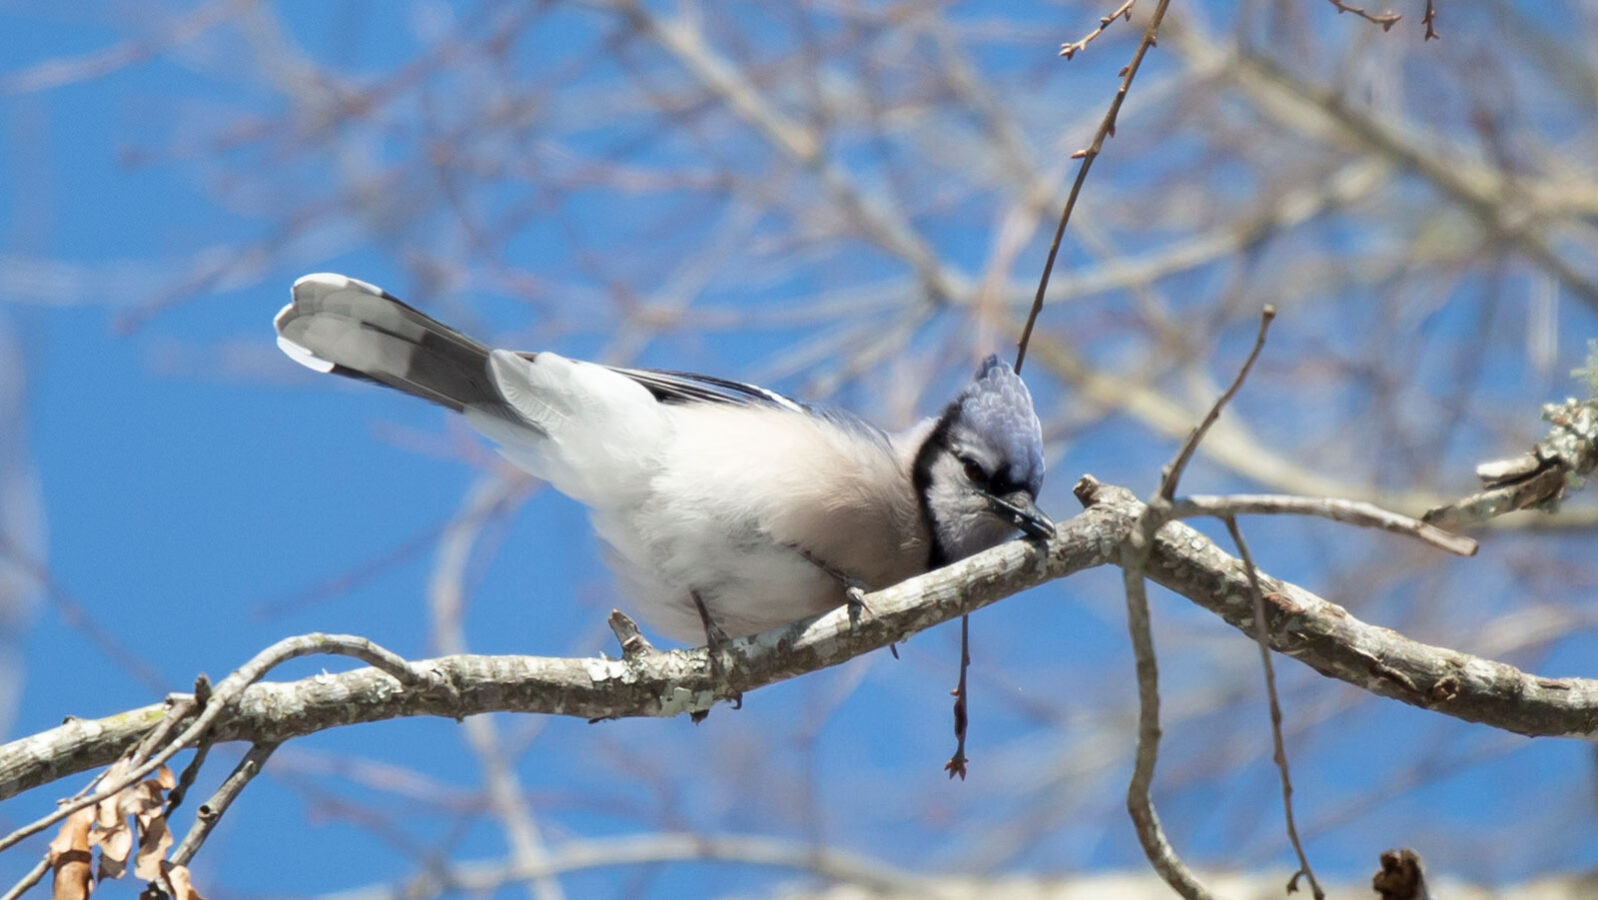 Blue jay sharpening its beak on a tree branch